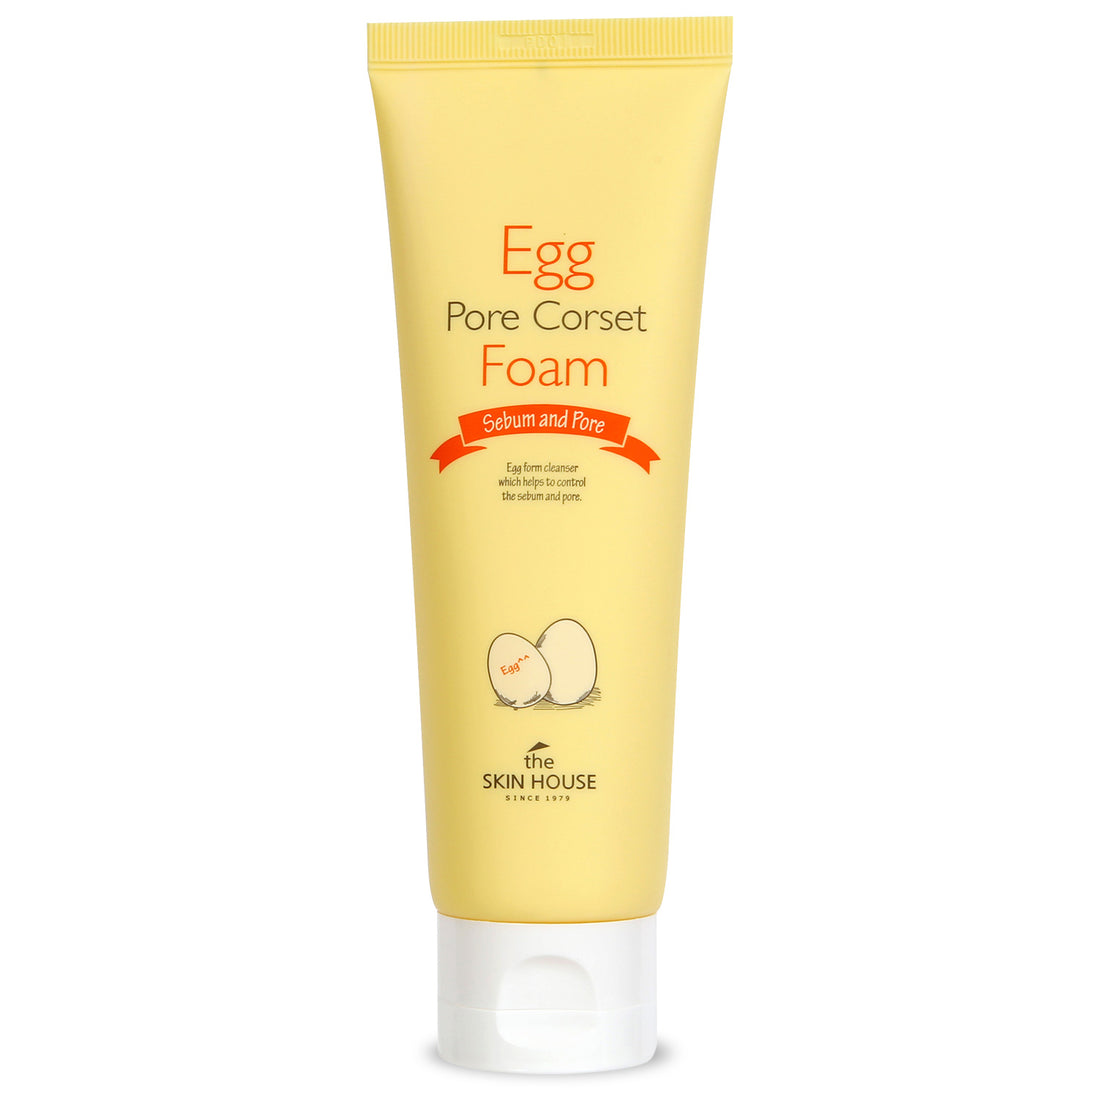 Egg Pore Corset Foam